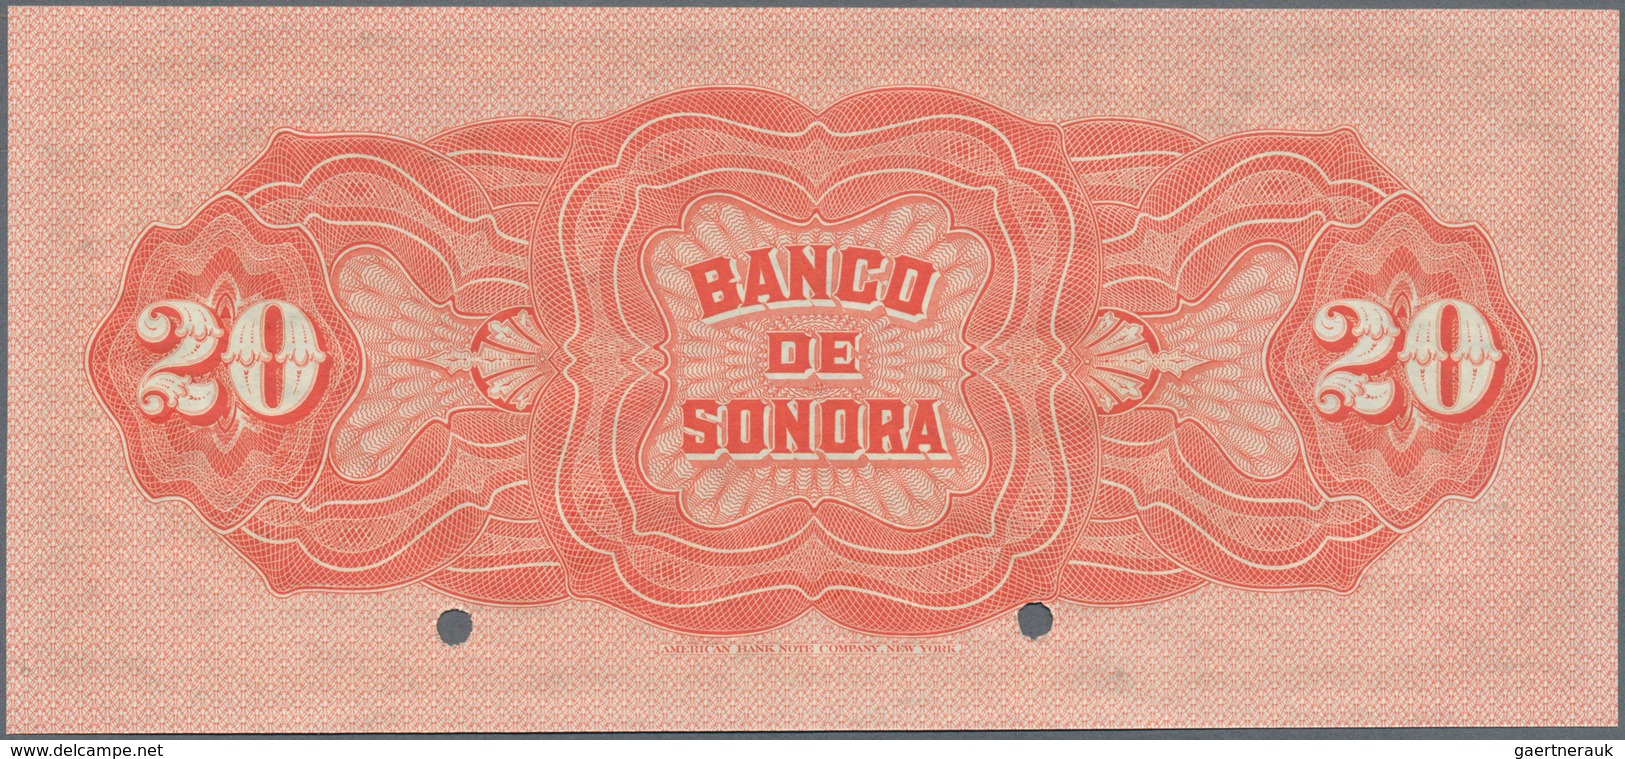 Mexico: El Banco De Sonora 20 Pesos 1899-1911 SPECIMEN, P.S421s, Punch Hole Cancellation And Red Ove - México